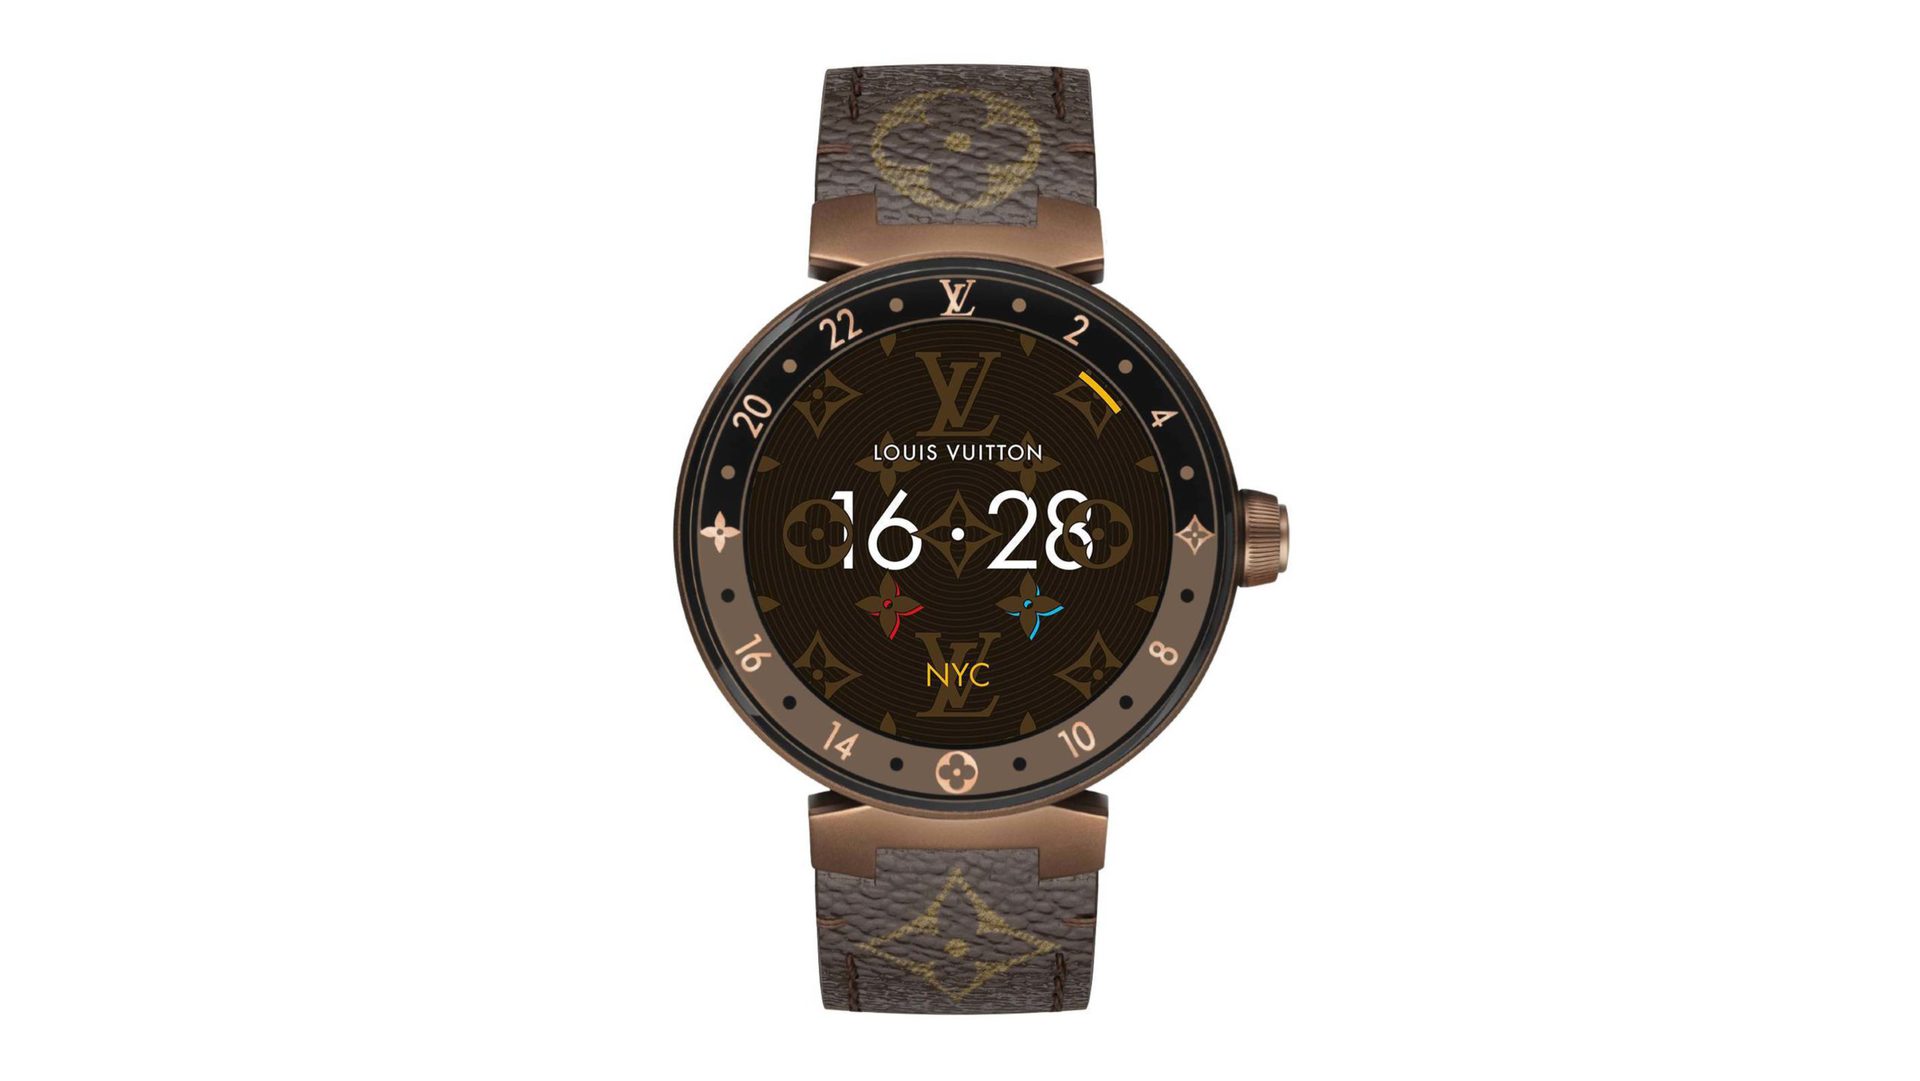 Product image of a Louis Vuitton Tambour Horizon smartwatch.